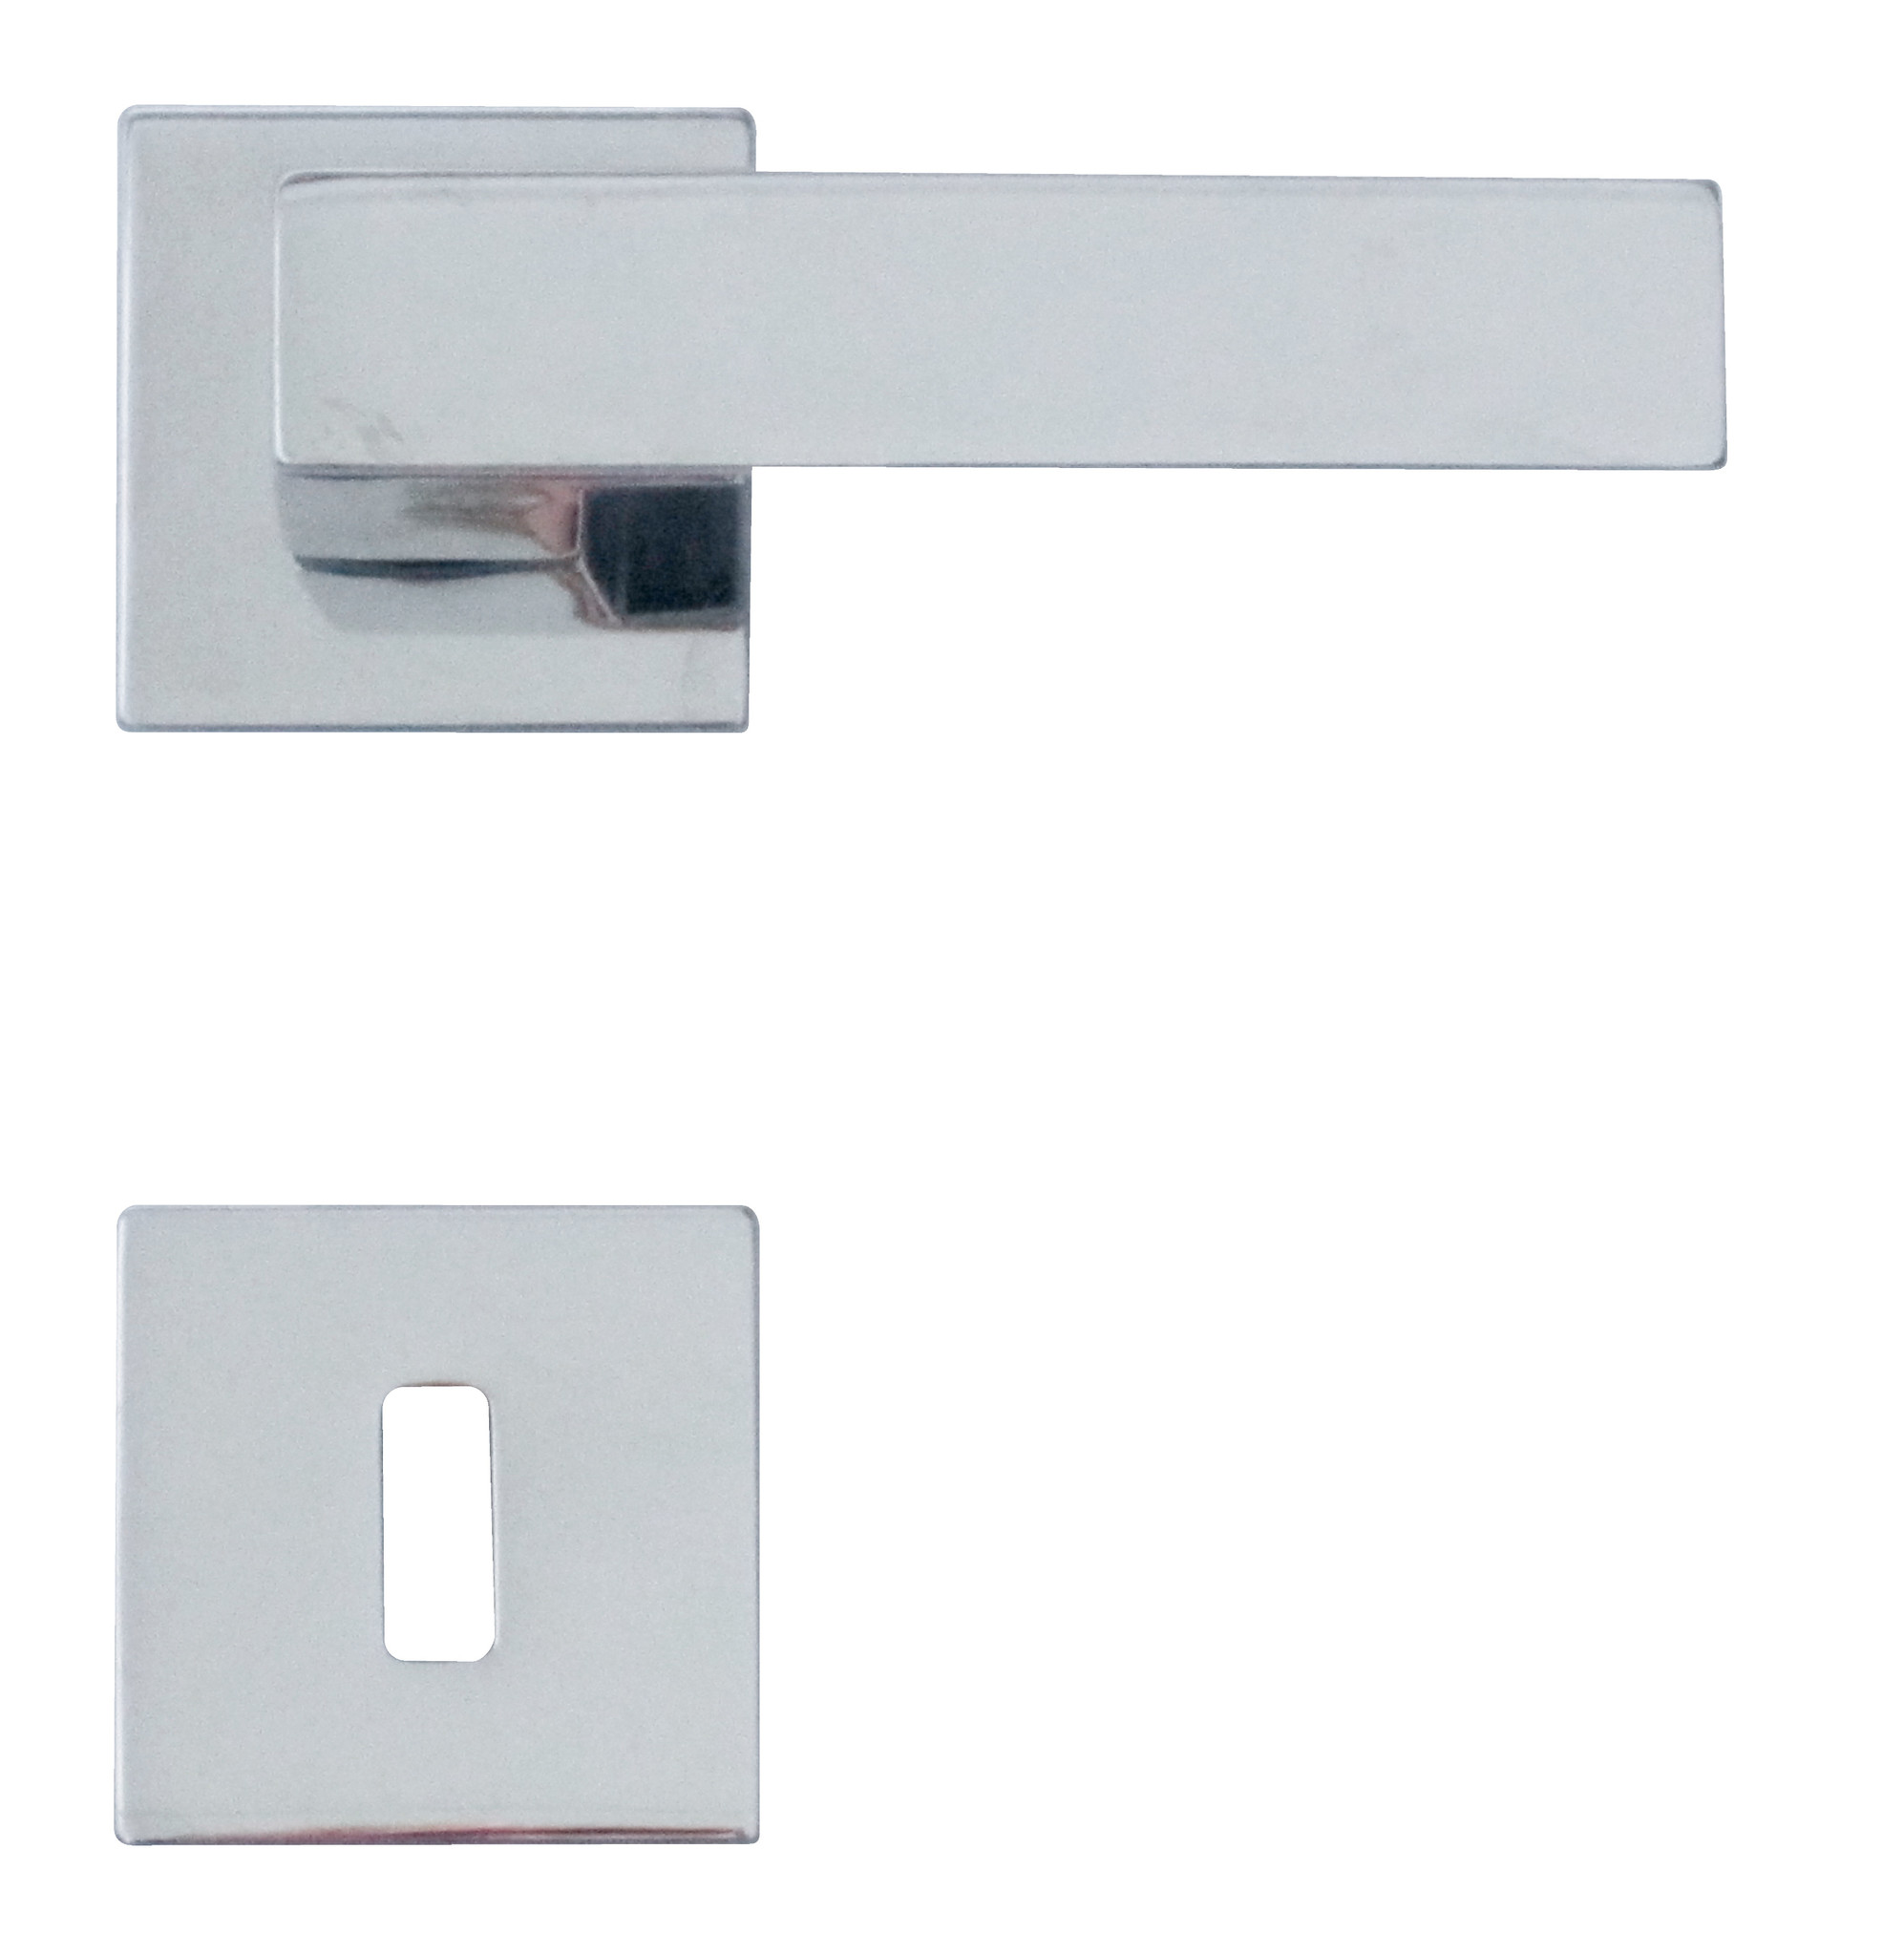 Chrome door handles with key plates